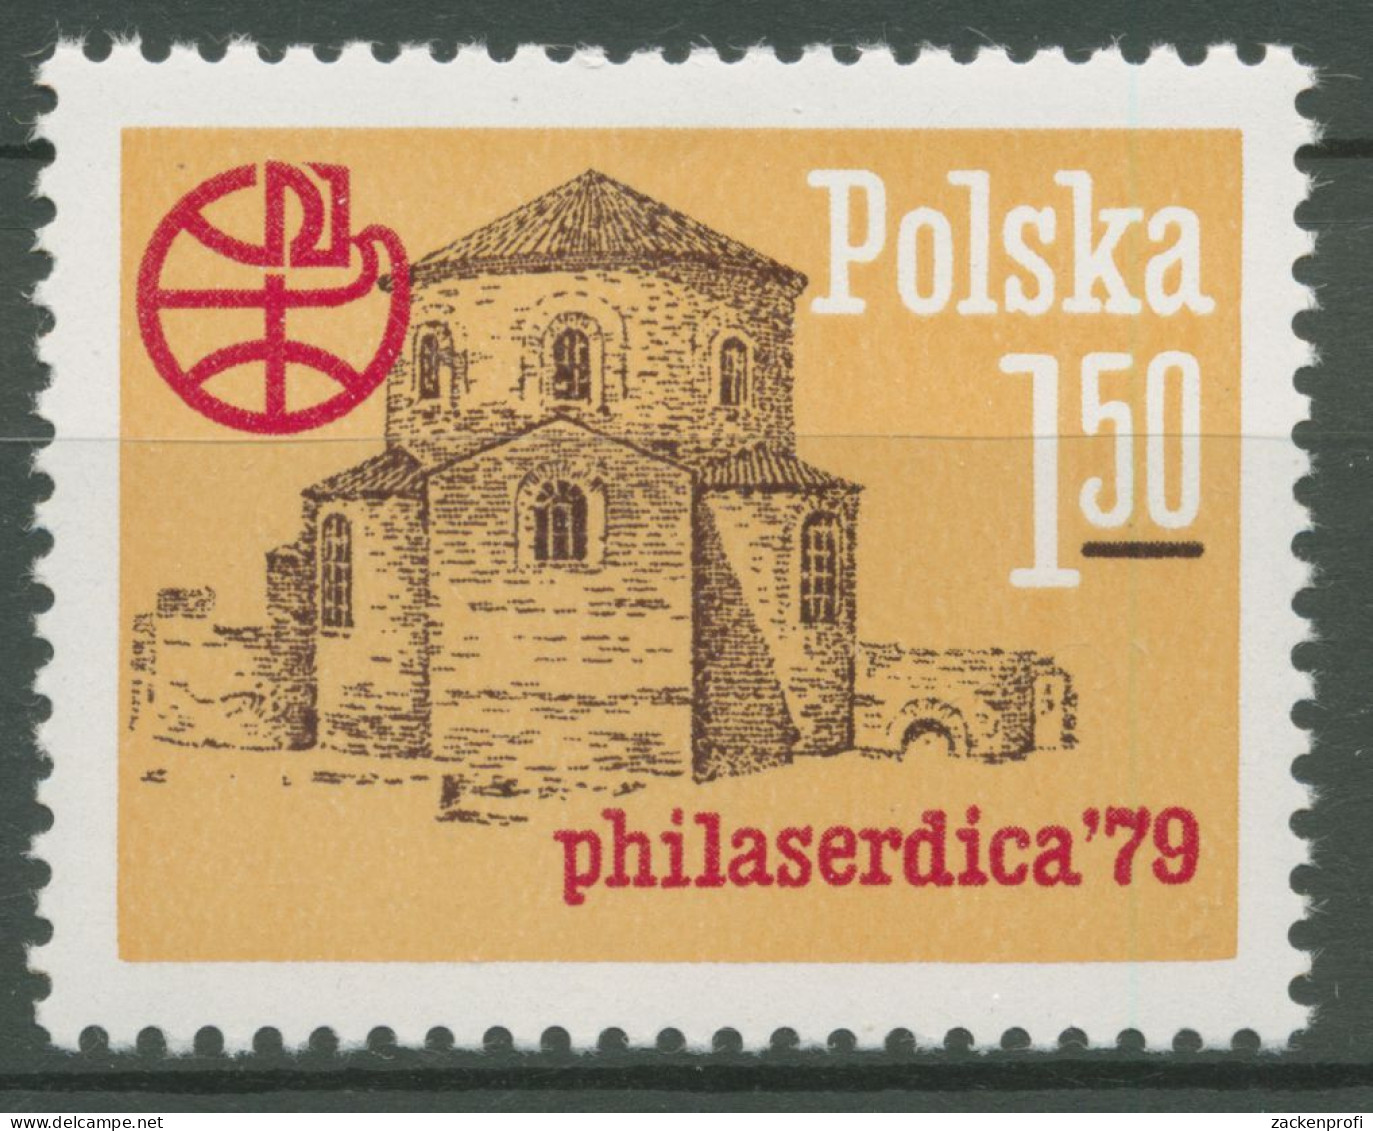 Polen 1979 PHILASERDICA Sofia St.-Georgs-Kirche 2627 Postfrisch - Ongebruikt